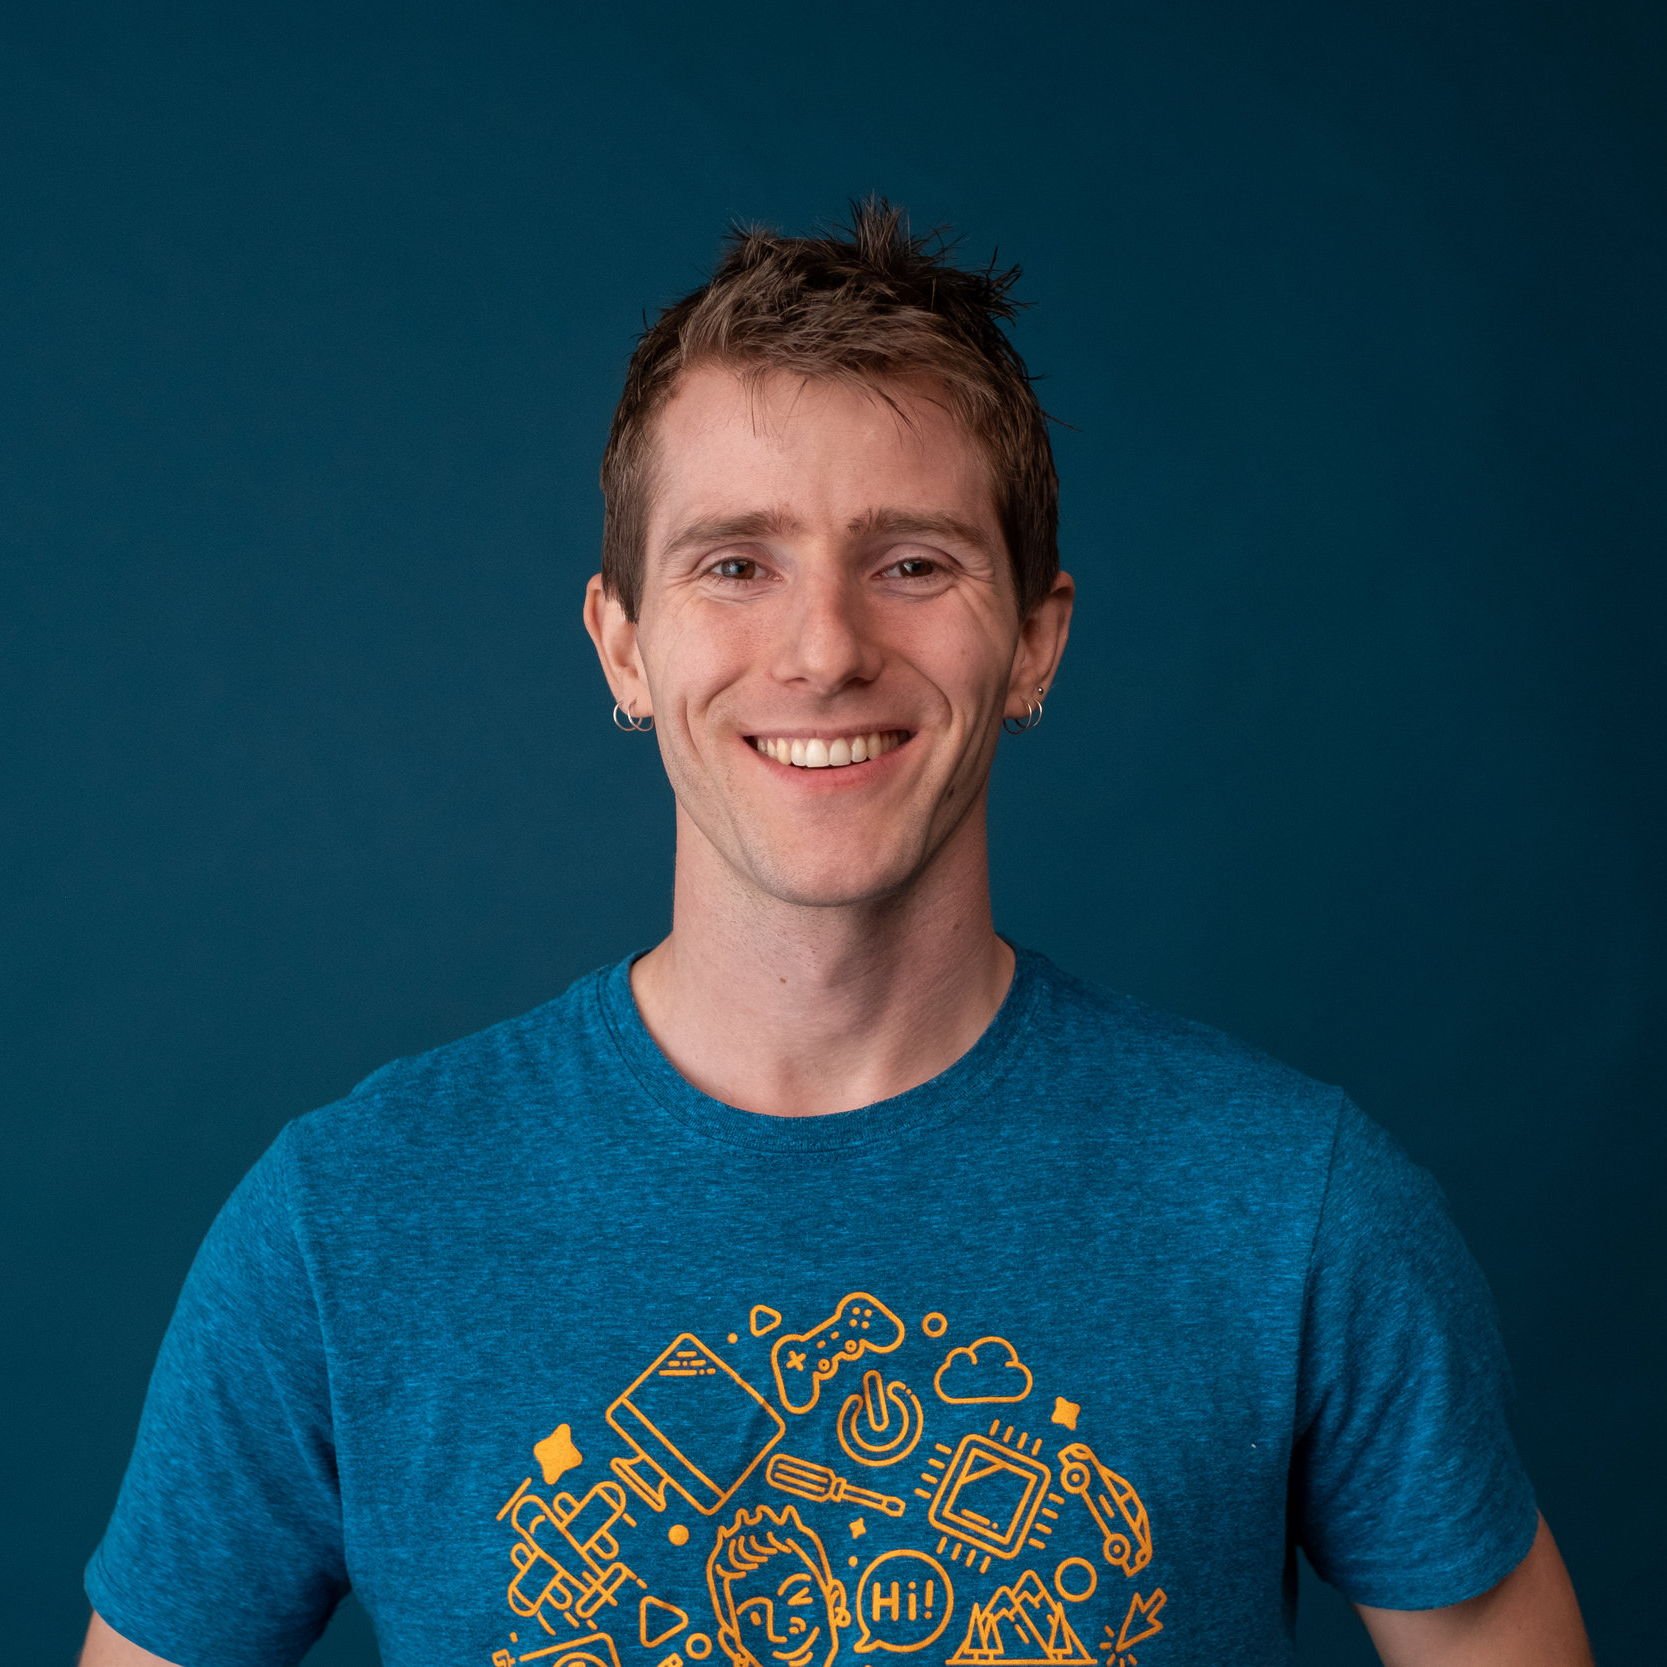 Linus tech tips, tech tutorials channel, computer specialist content creator